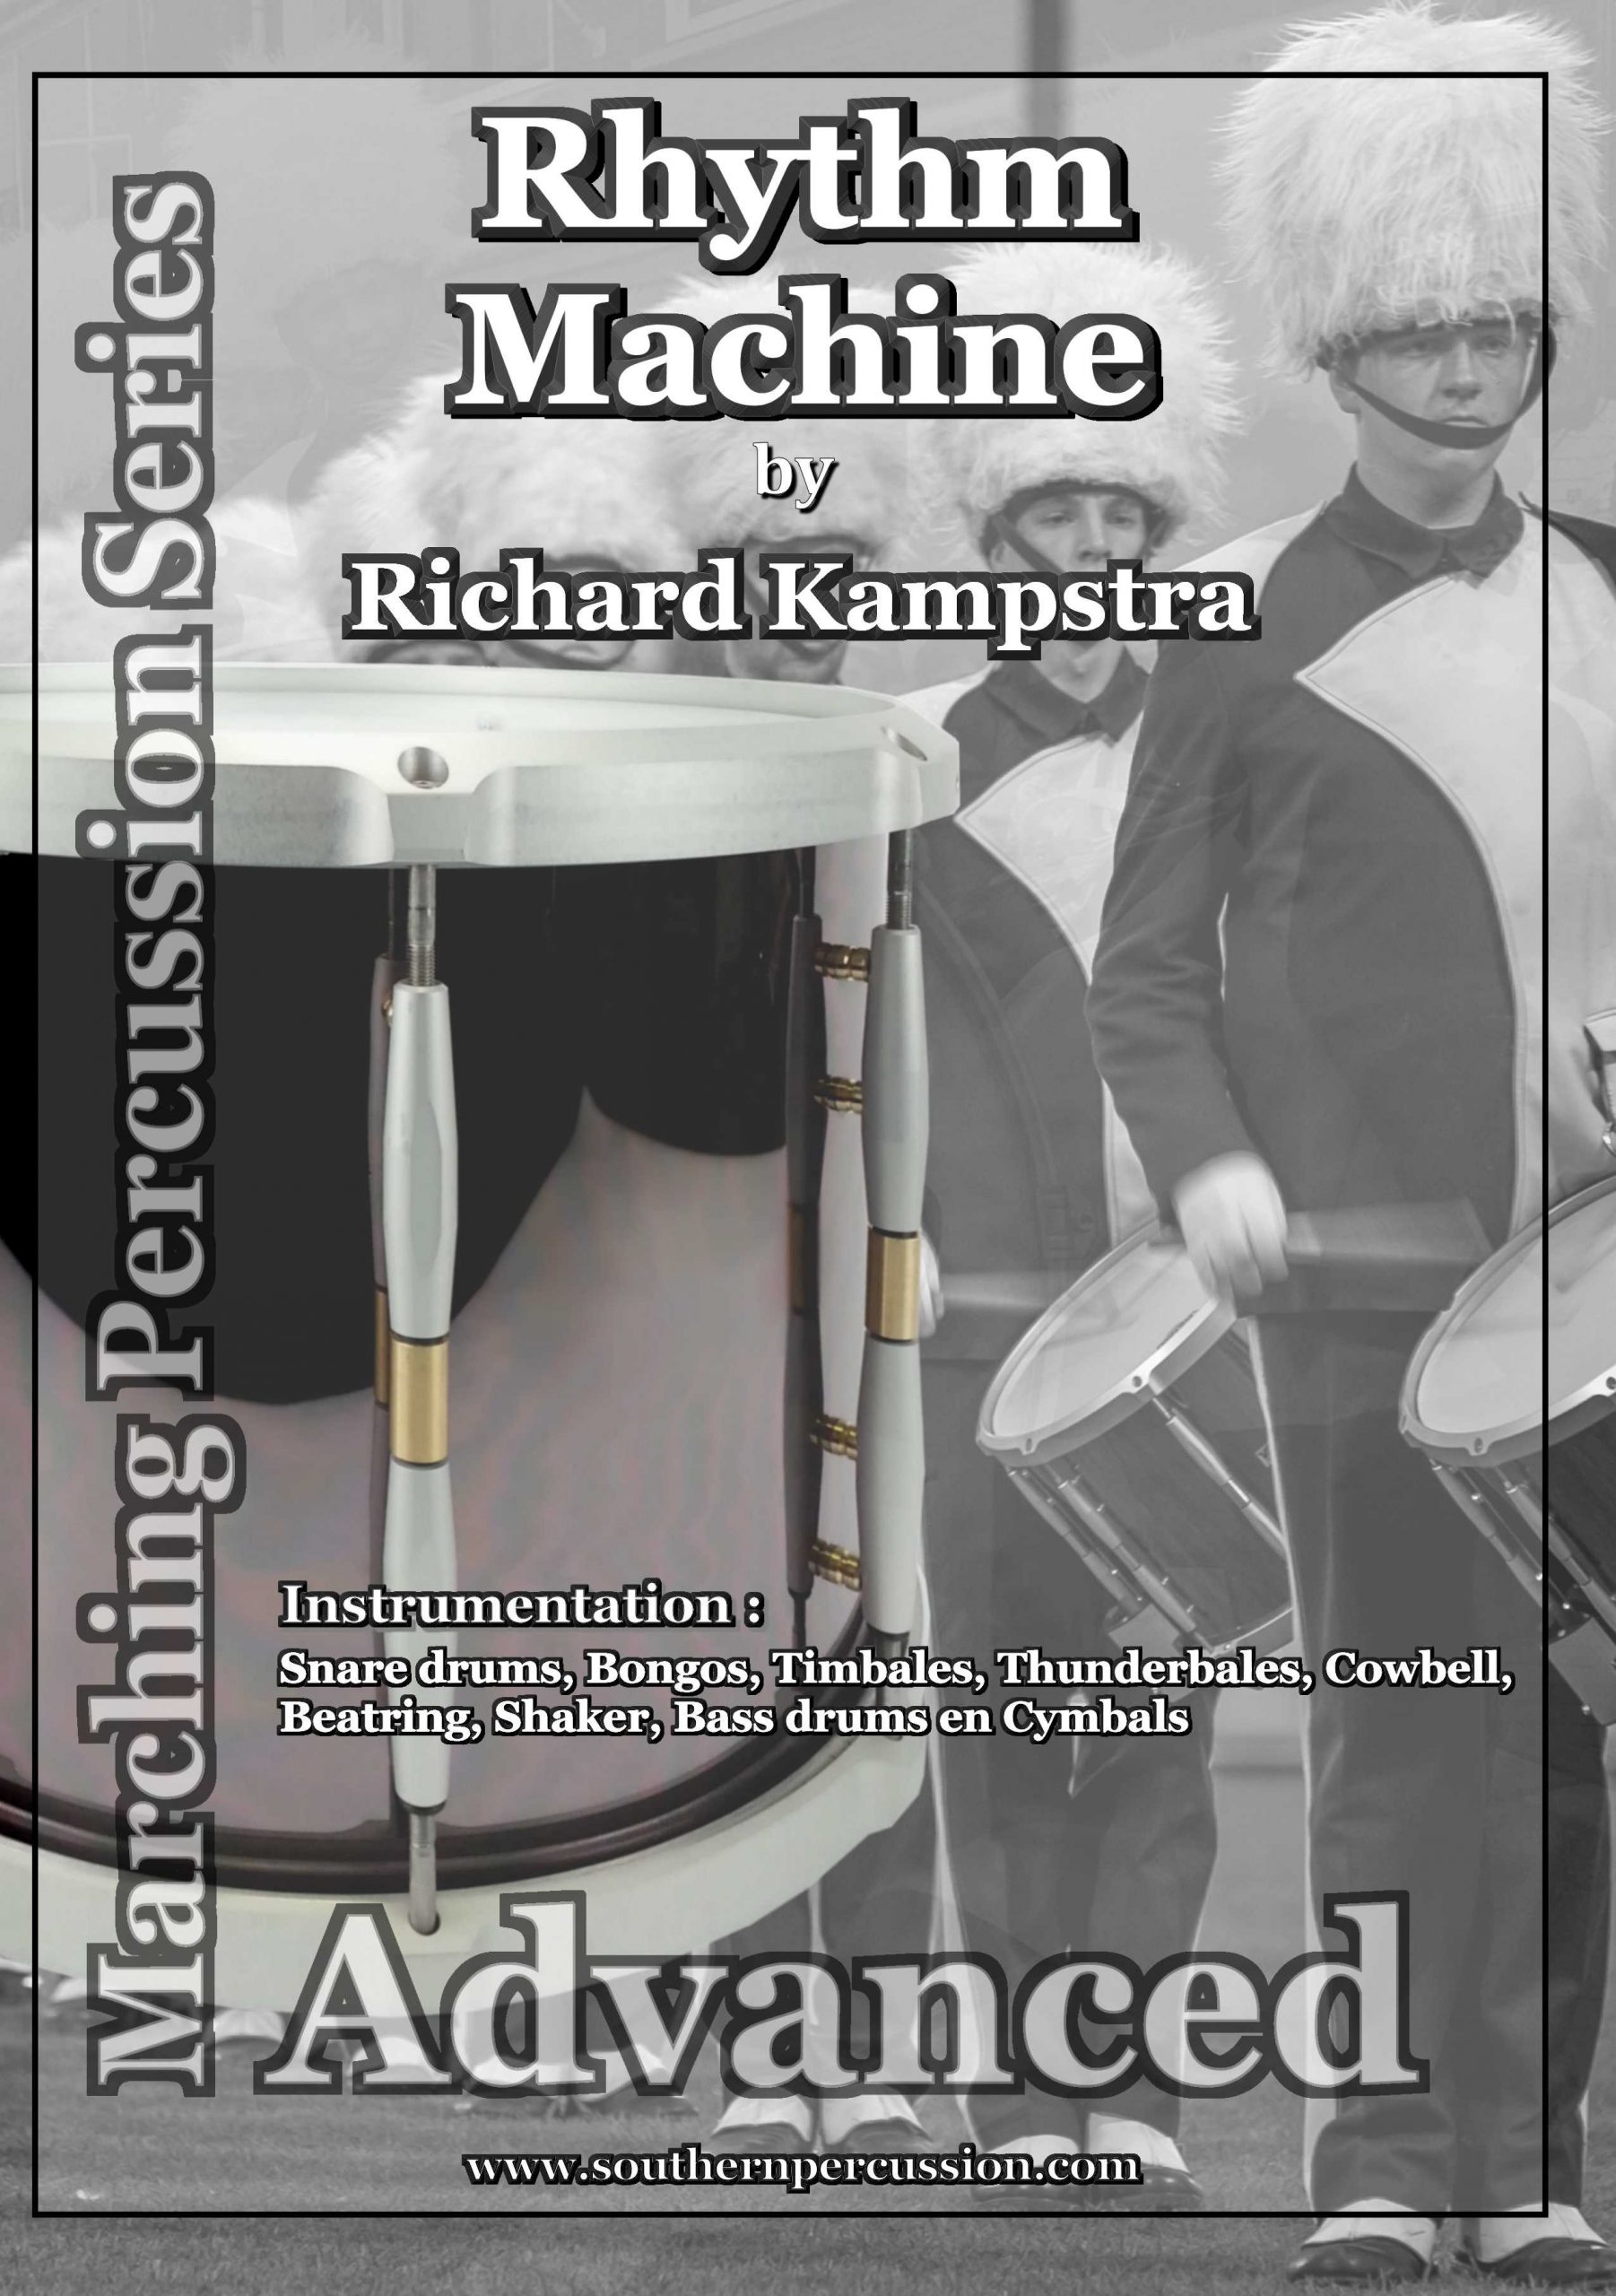 Rhythm Machine by Richard Kampstra